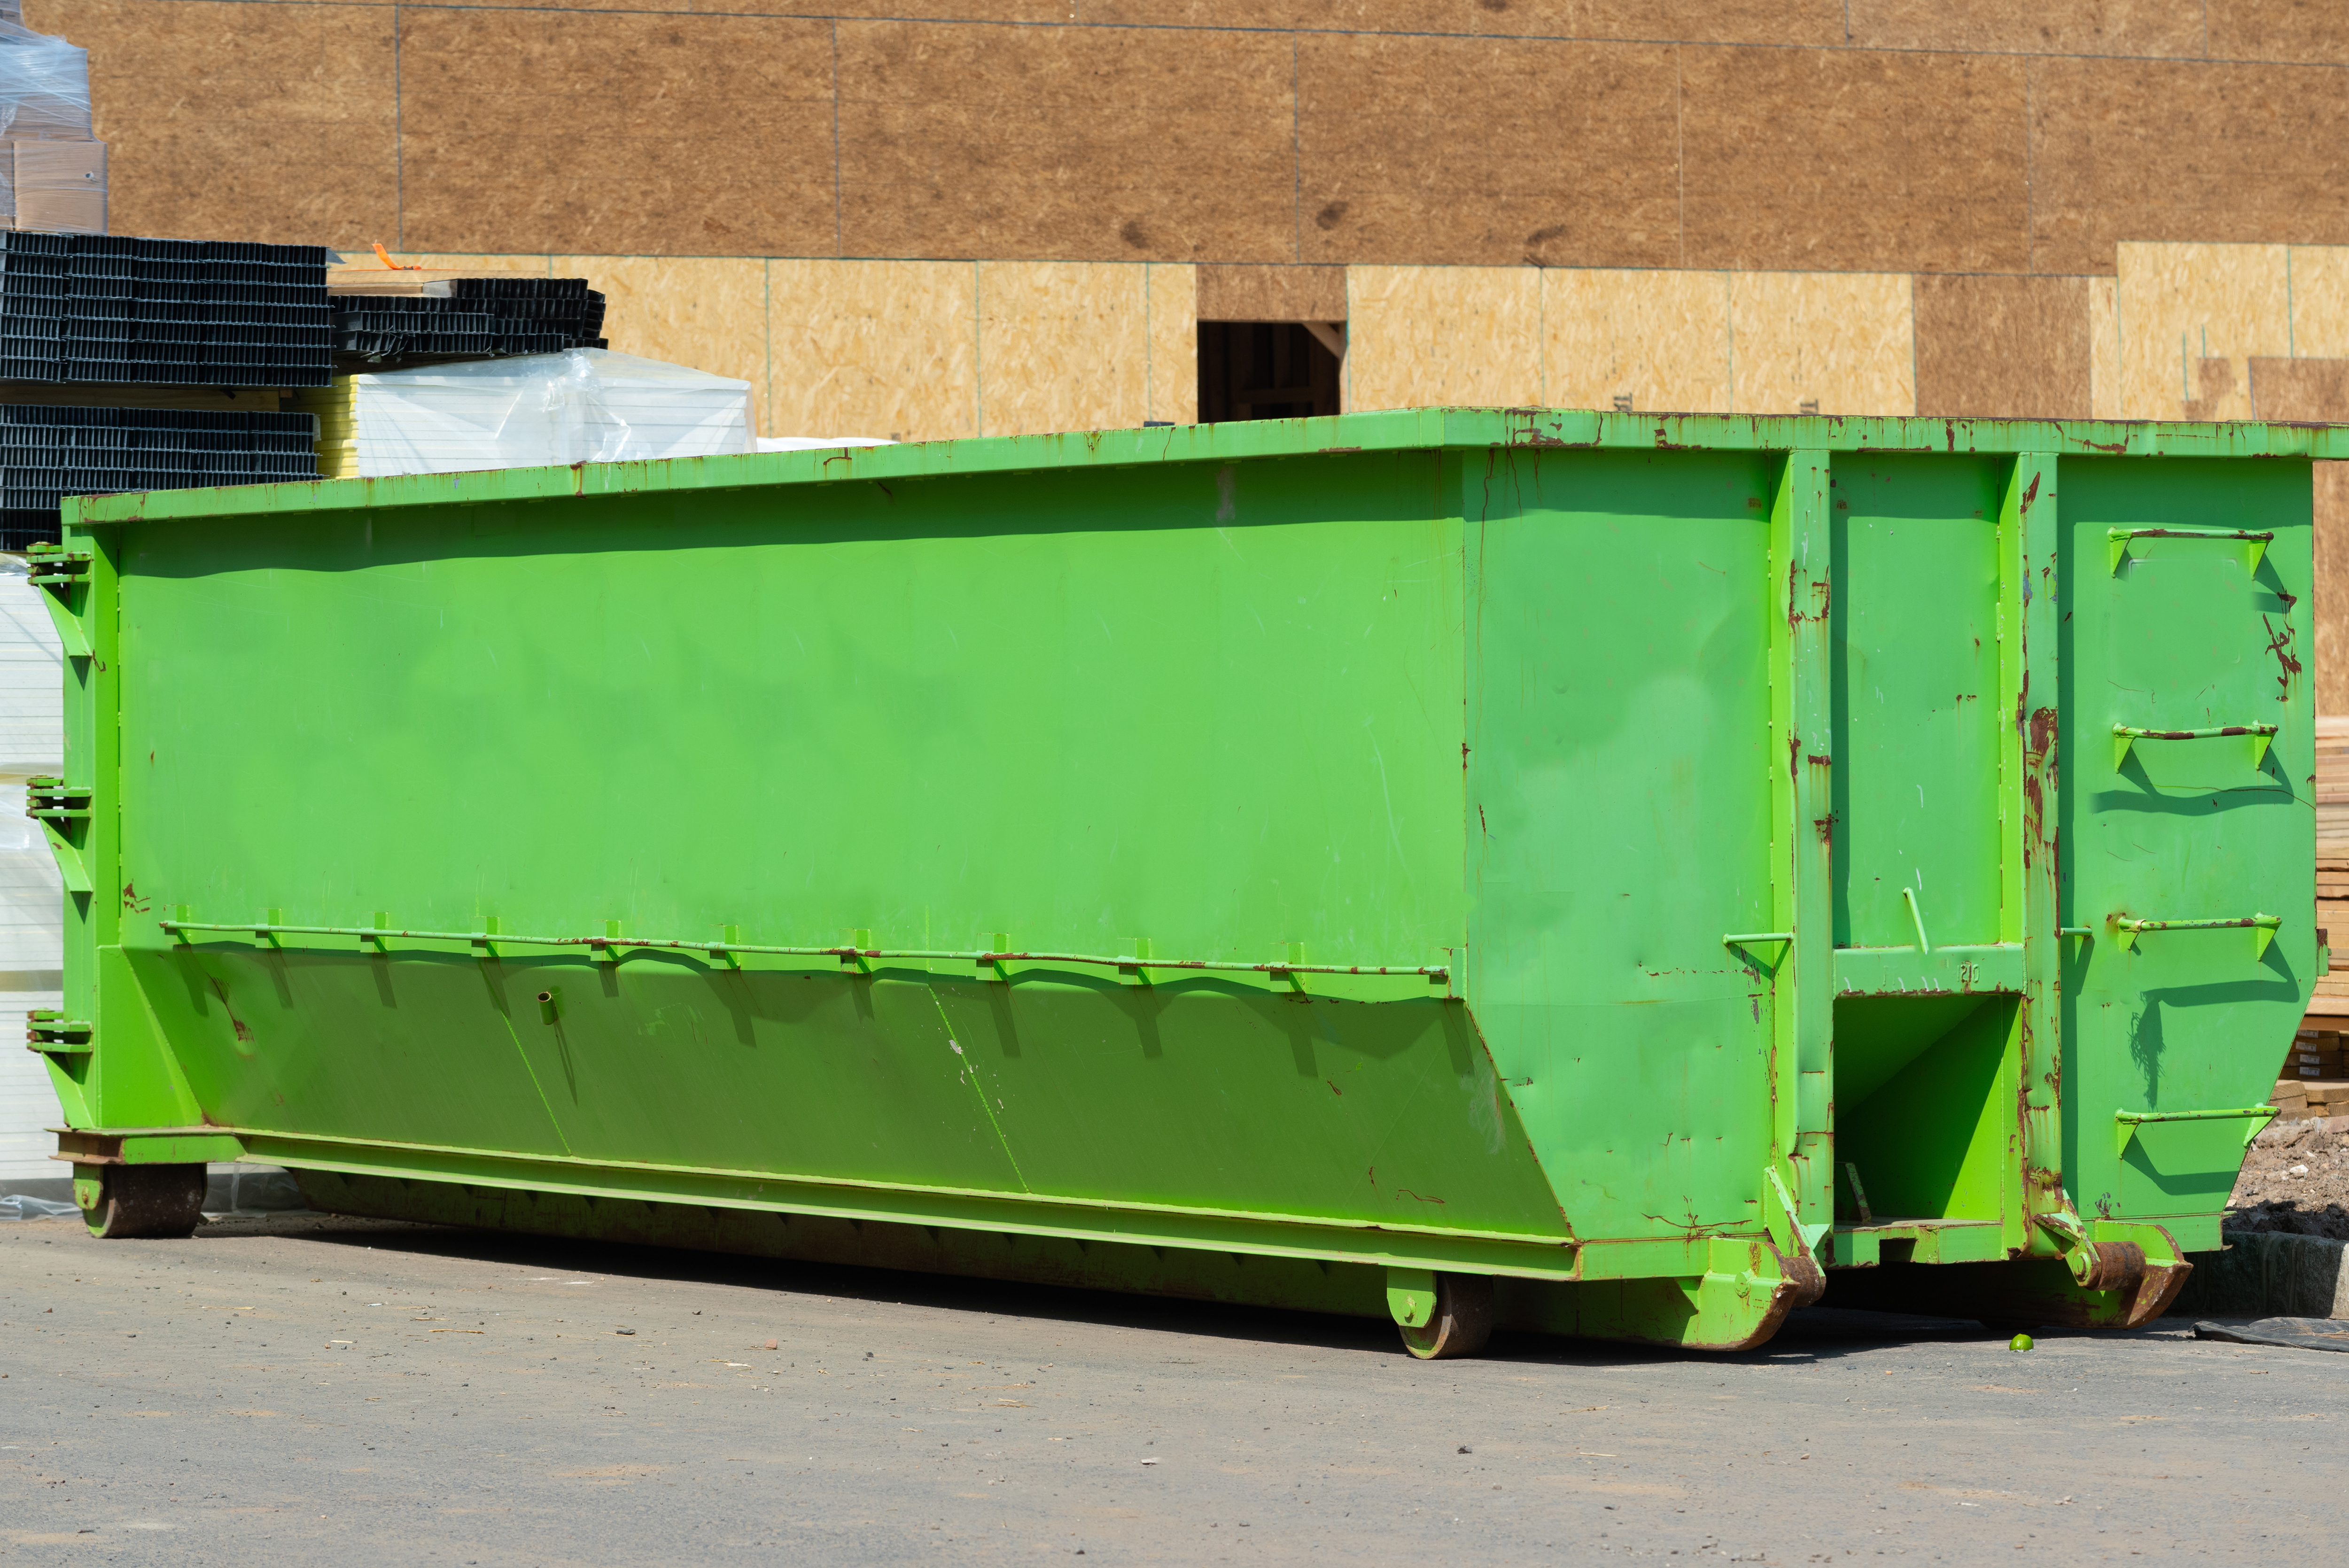 Rent a Roll Off Dumpster in Stockbridge, GA